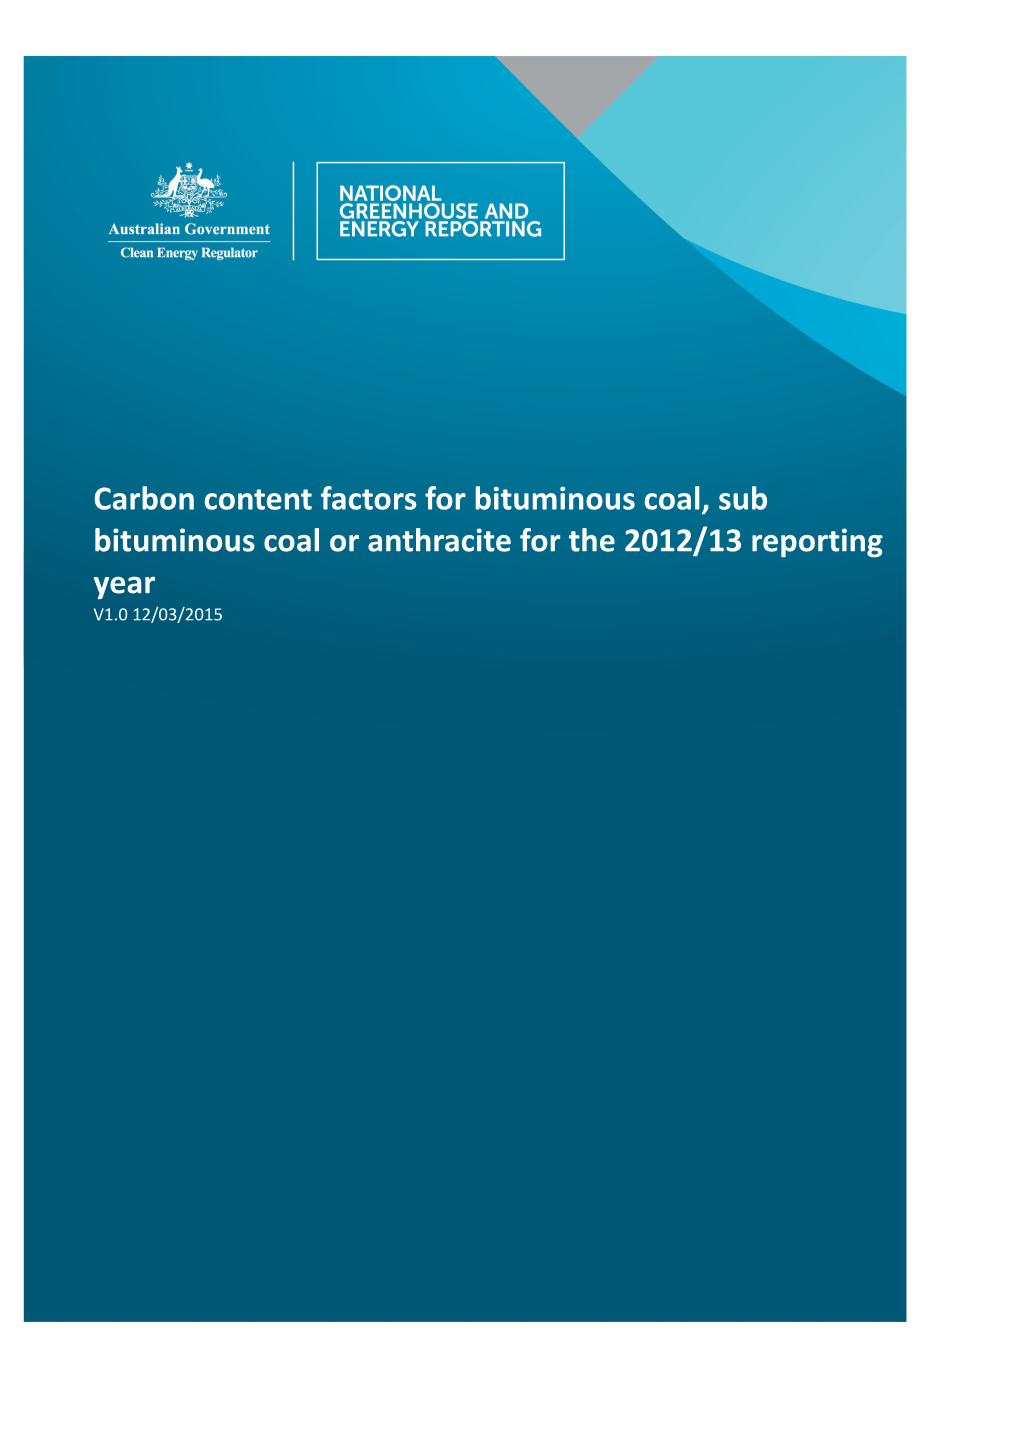 Carbon Content Factors for Bituminous Coal, Sub Bituminous Coal Or Anthracite for The